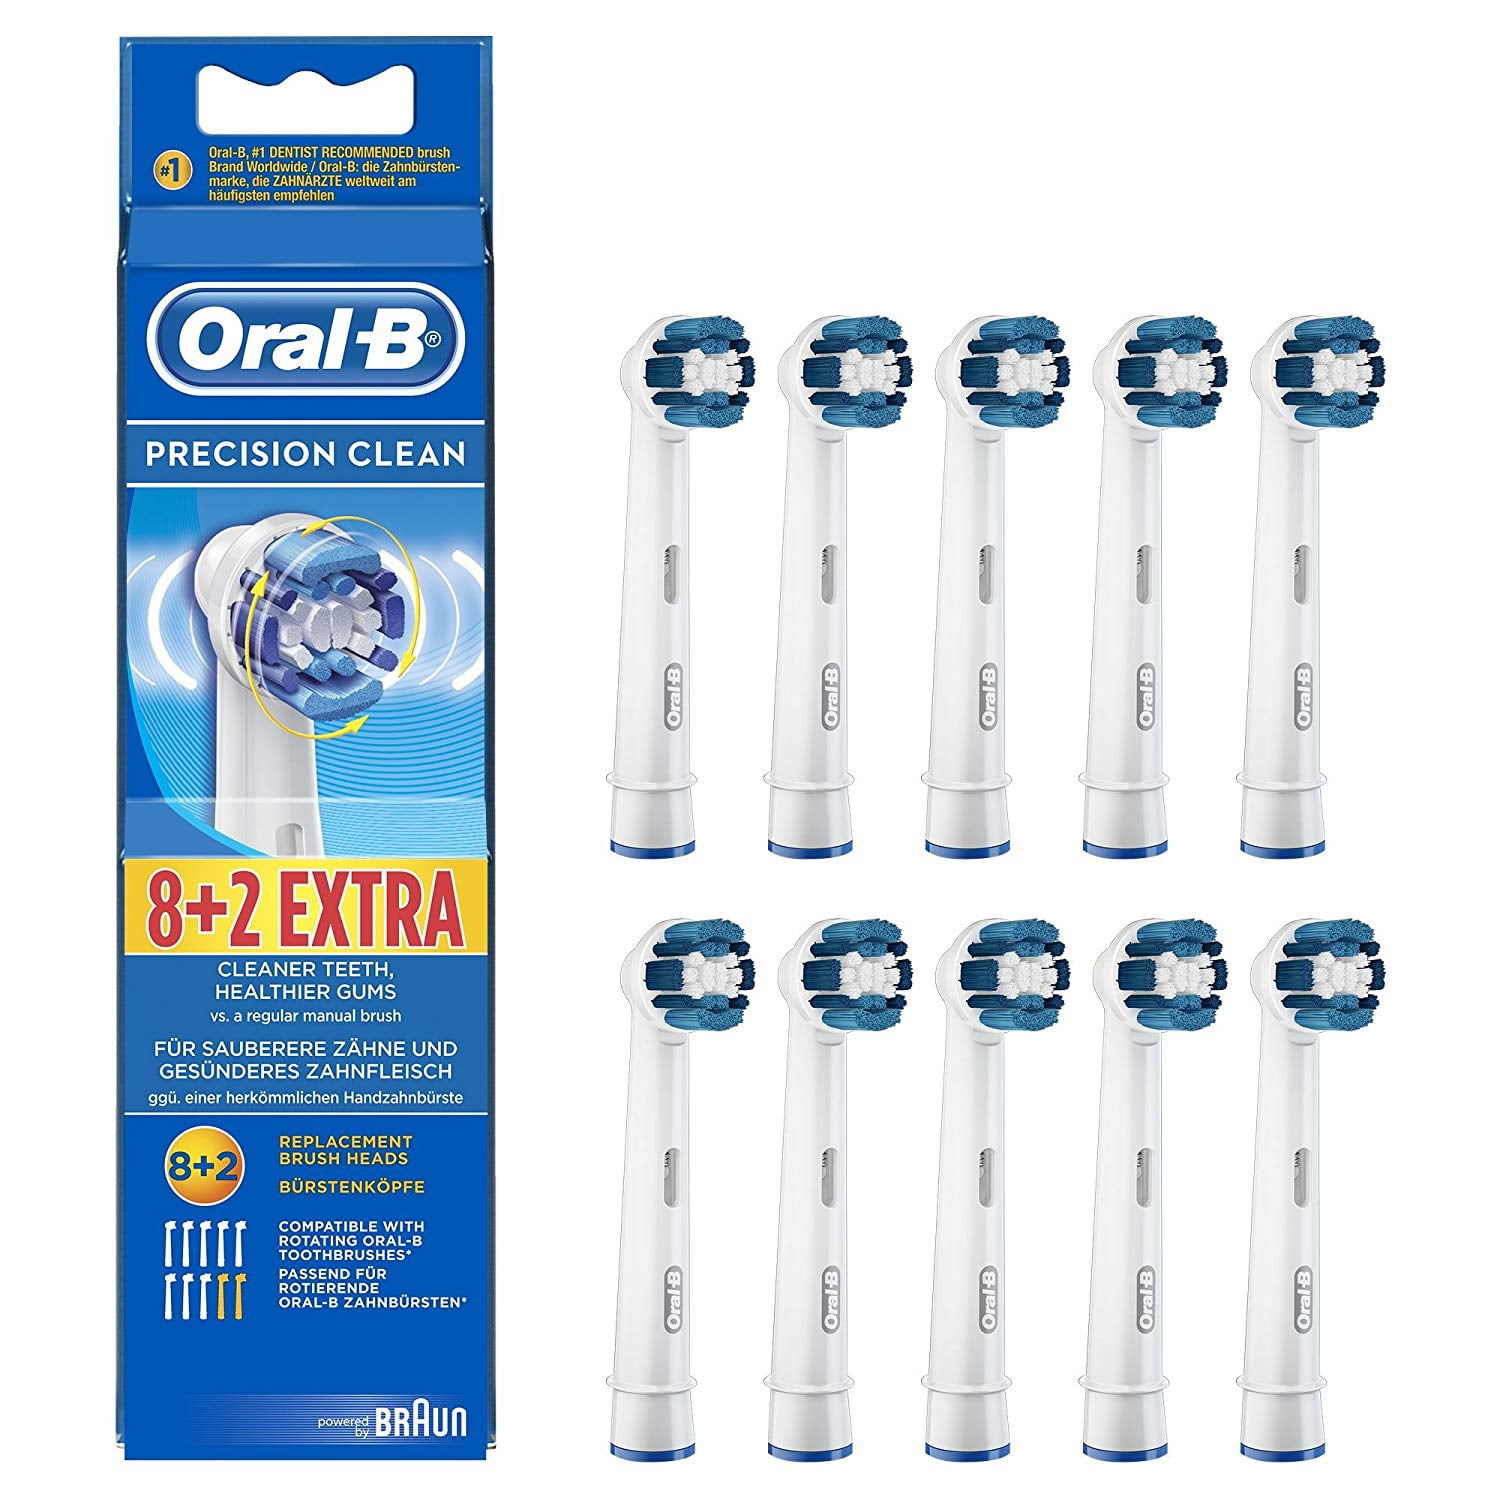 Original Braun Oral-B Precision Clean Replacement Toothbrush Heads 10 Count Walmart.com